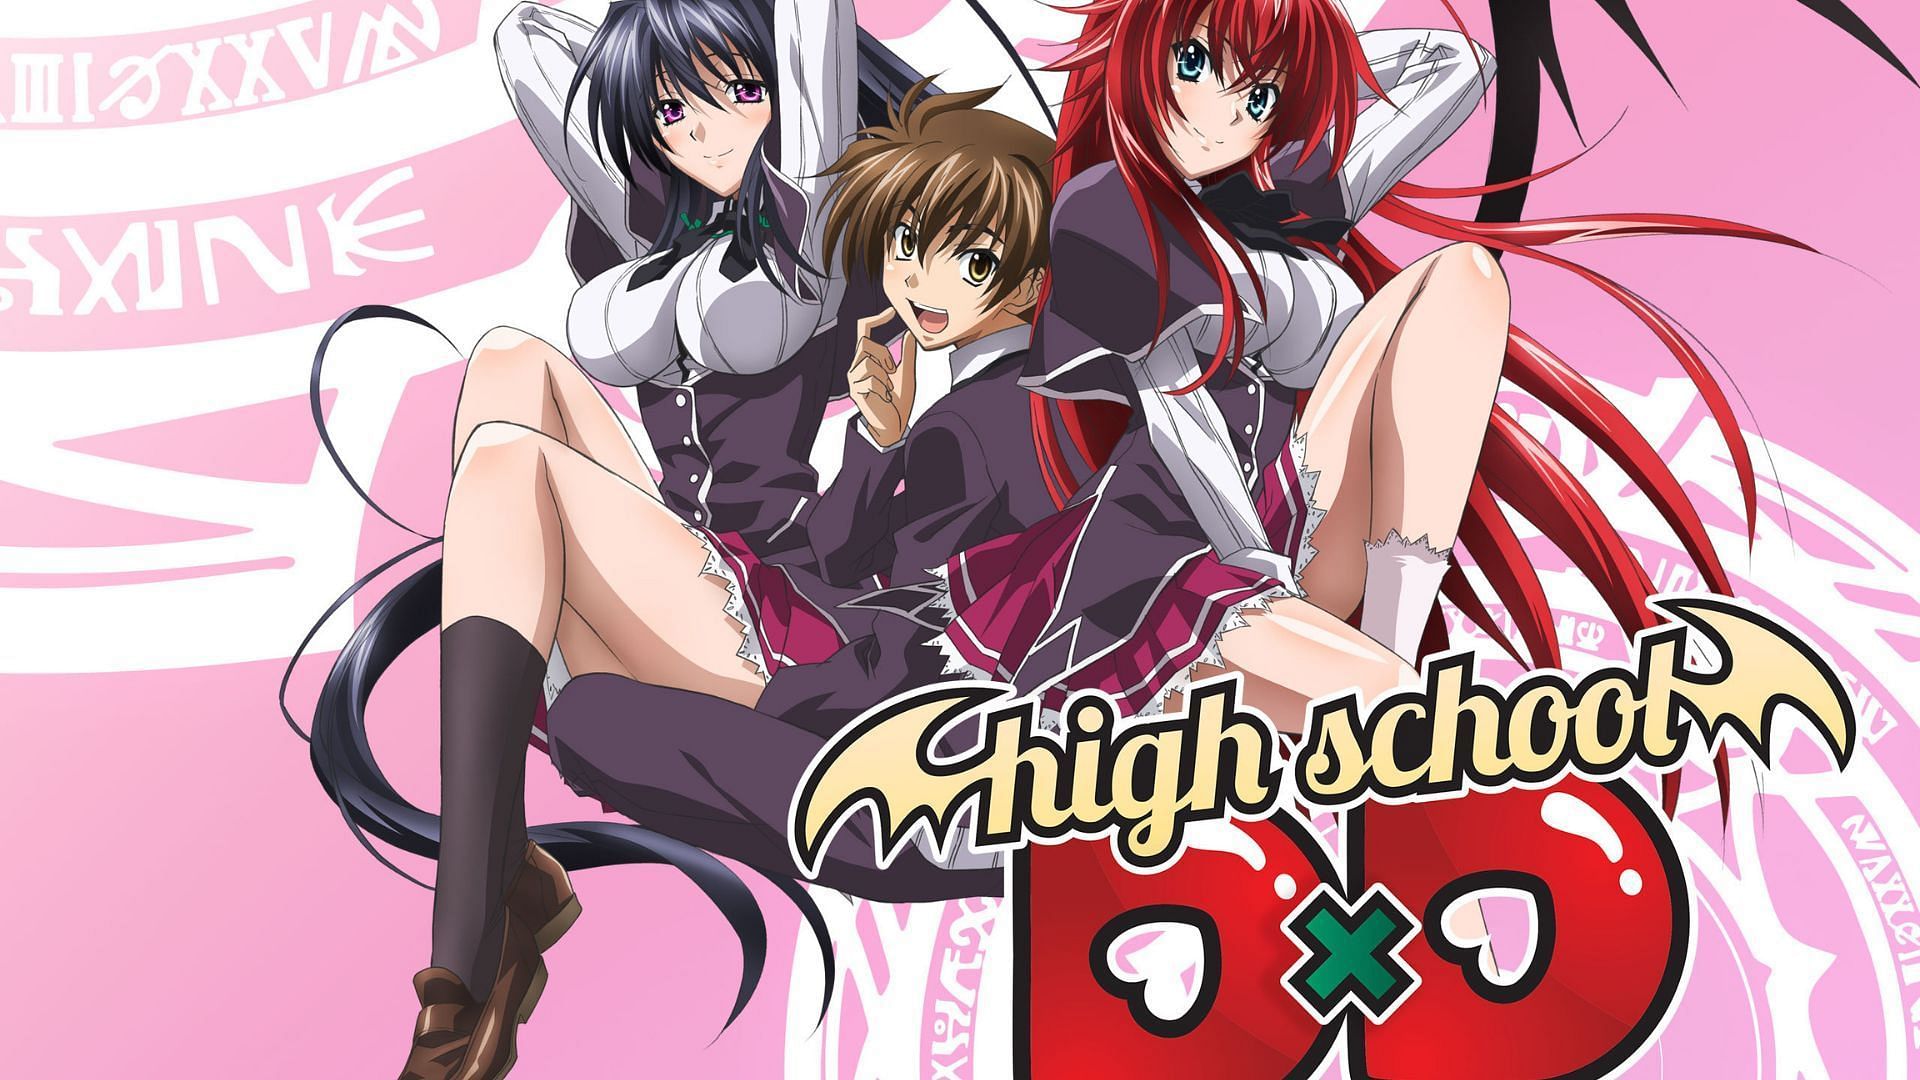 High School DxD  Watch on Funimation